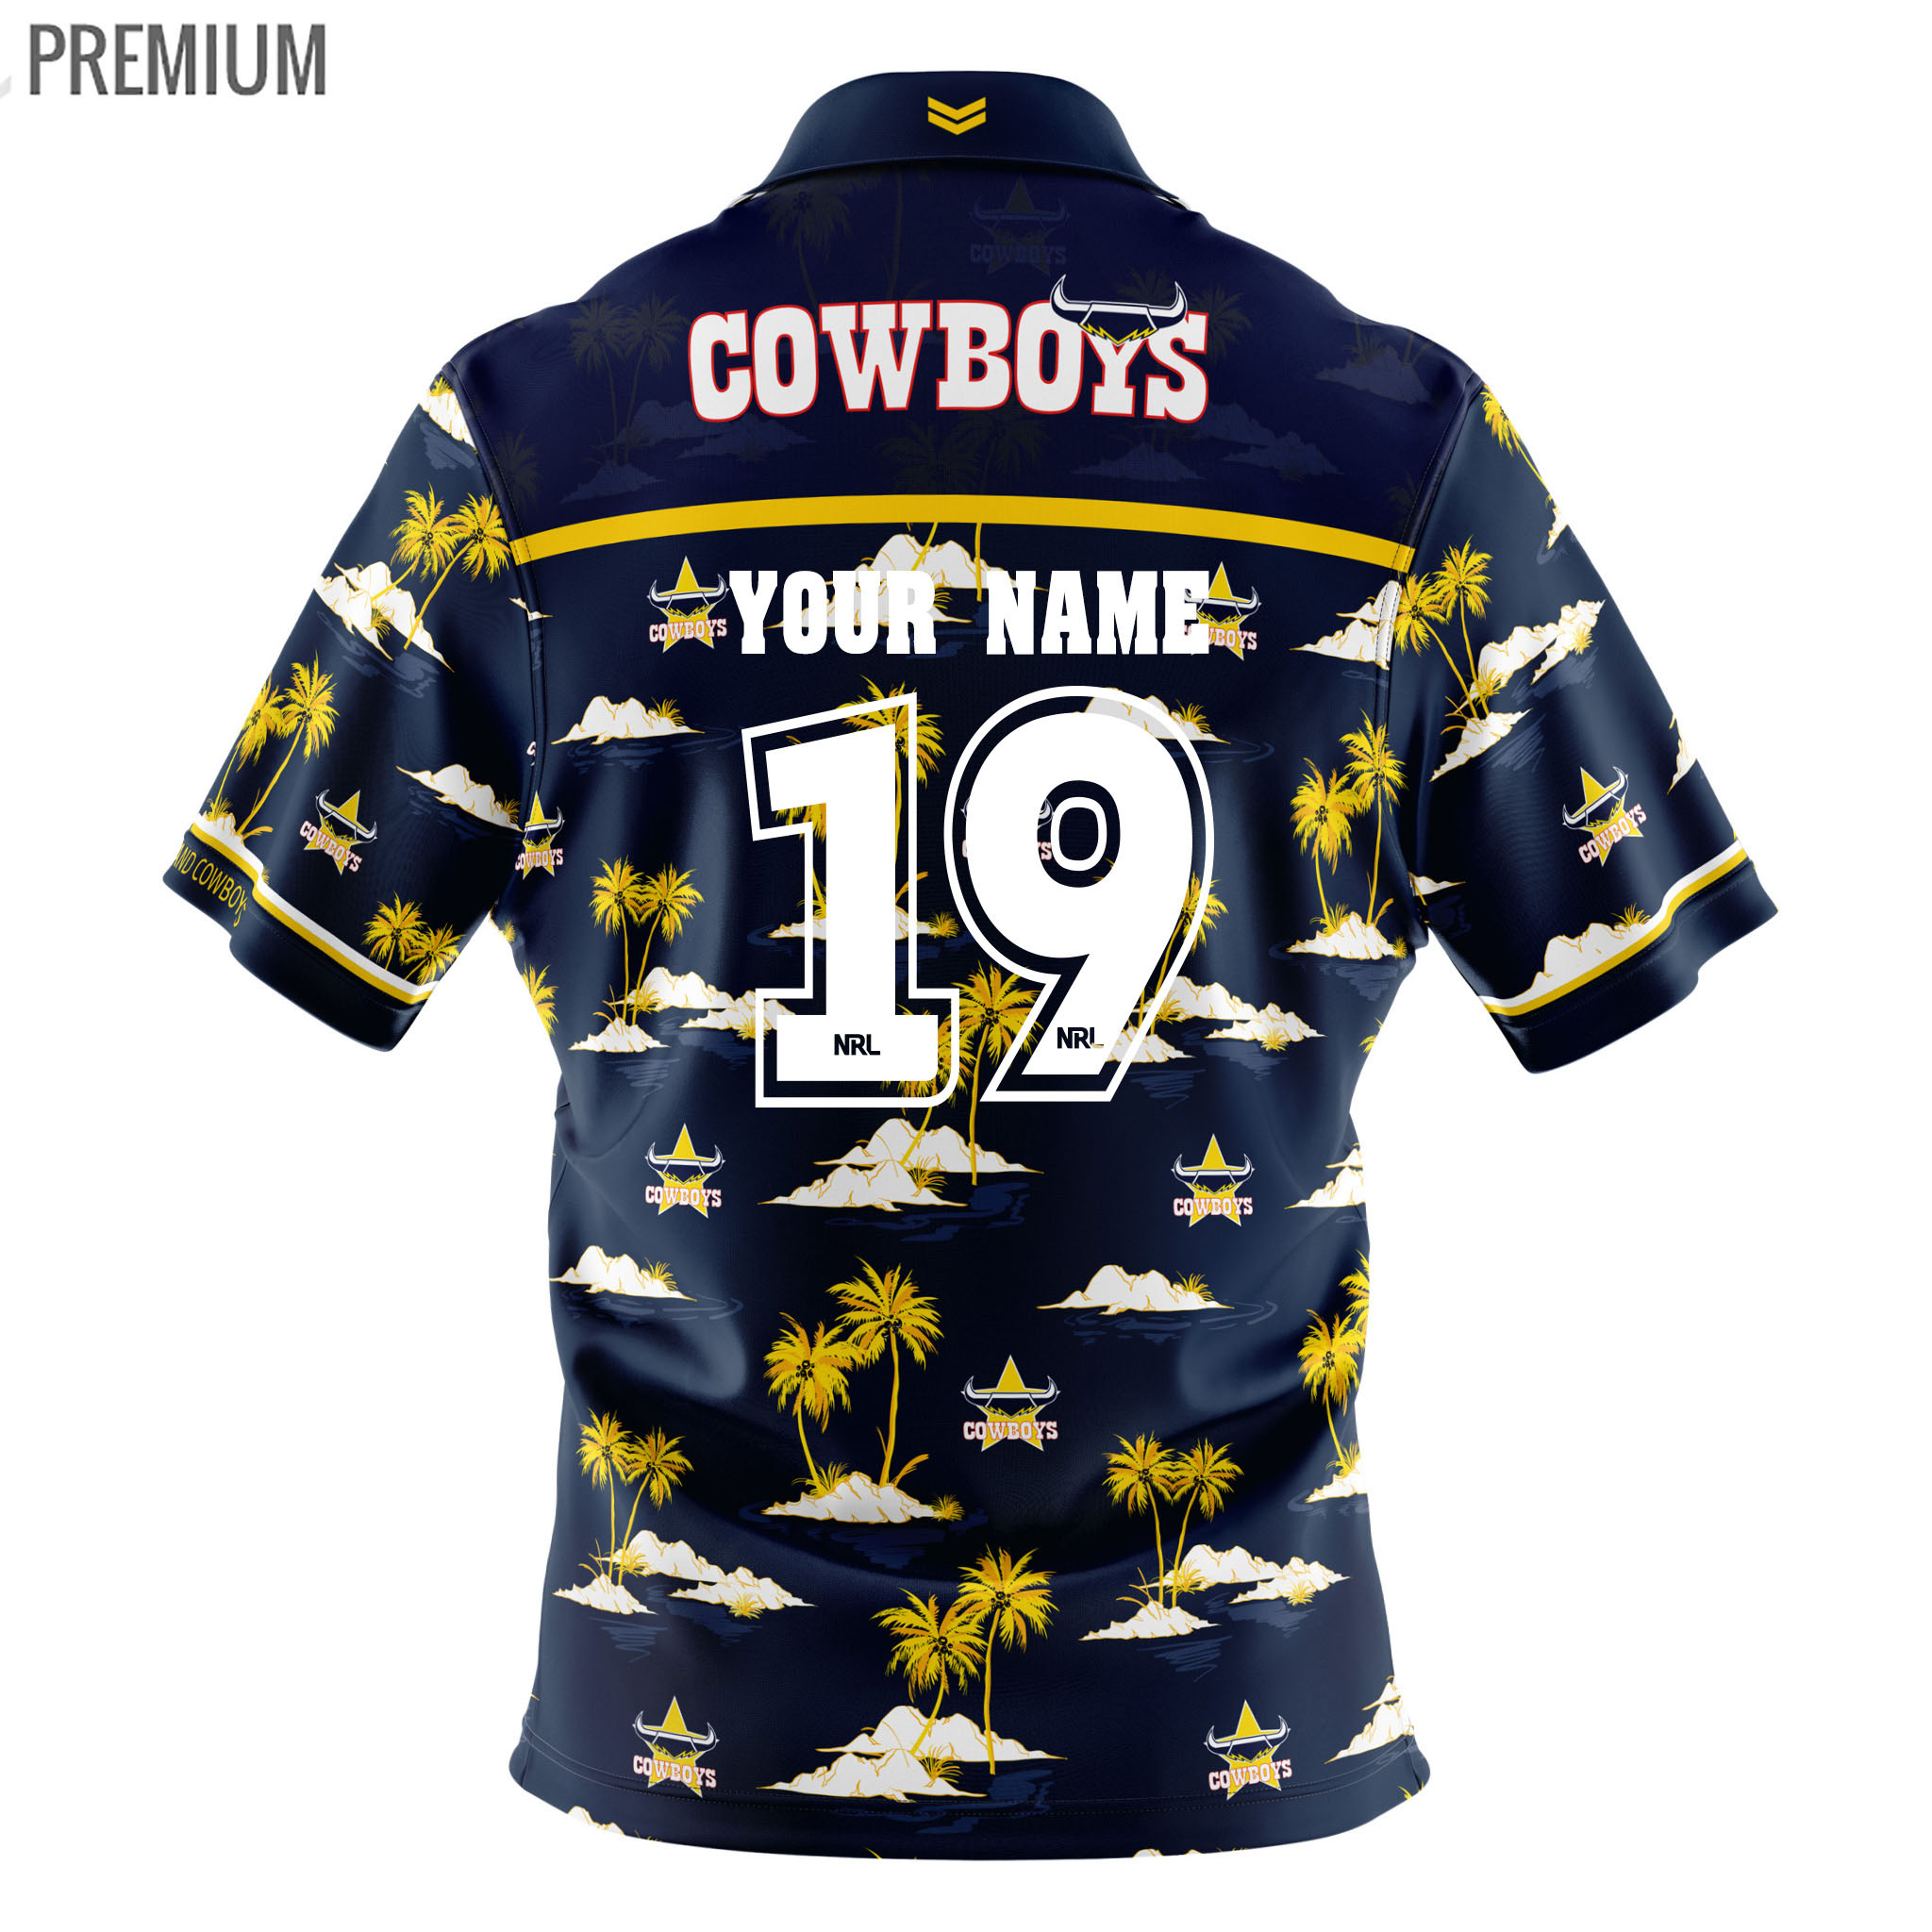 2019 cowboys jersey